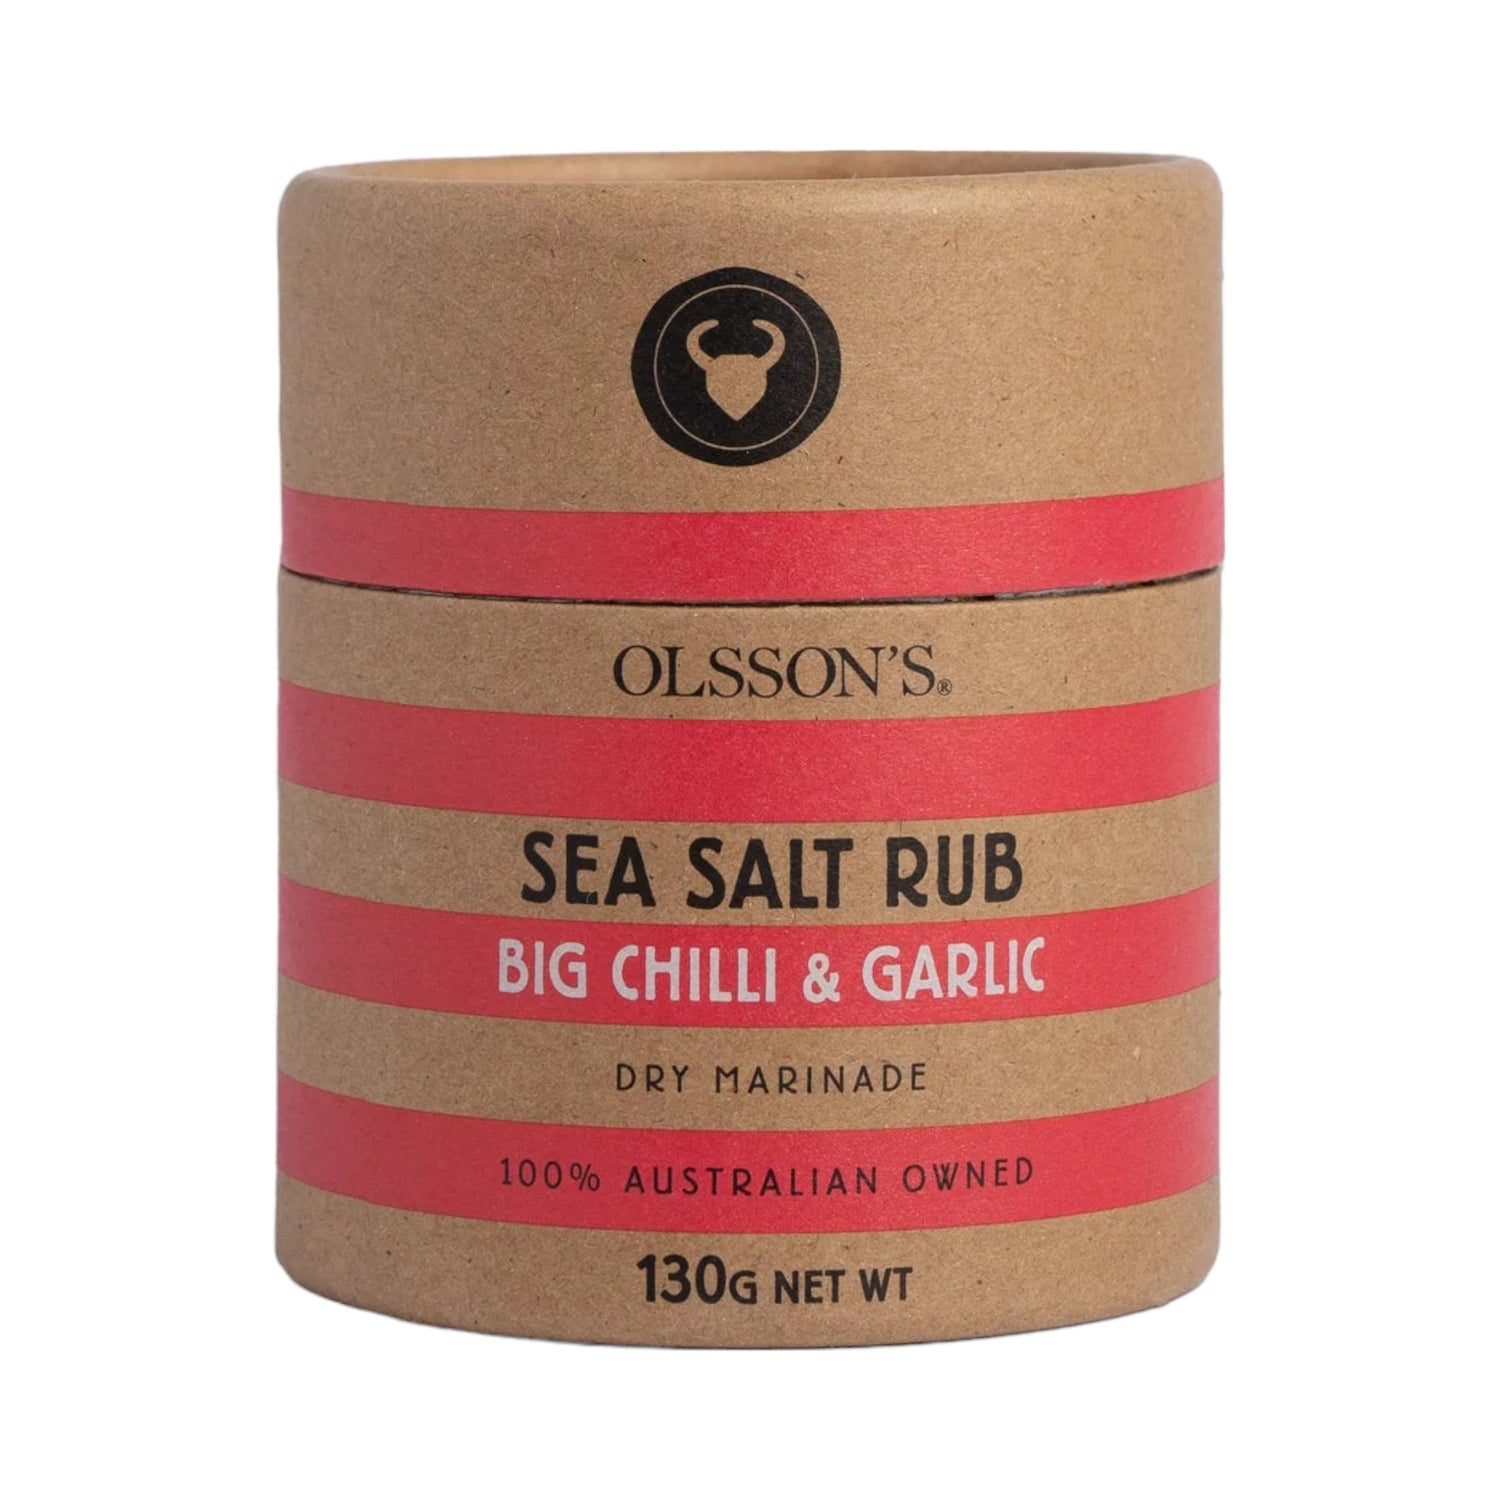 Sea Salt Rub - Big Chilli & Garlic